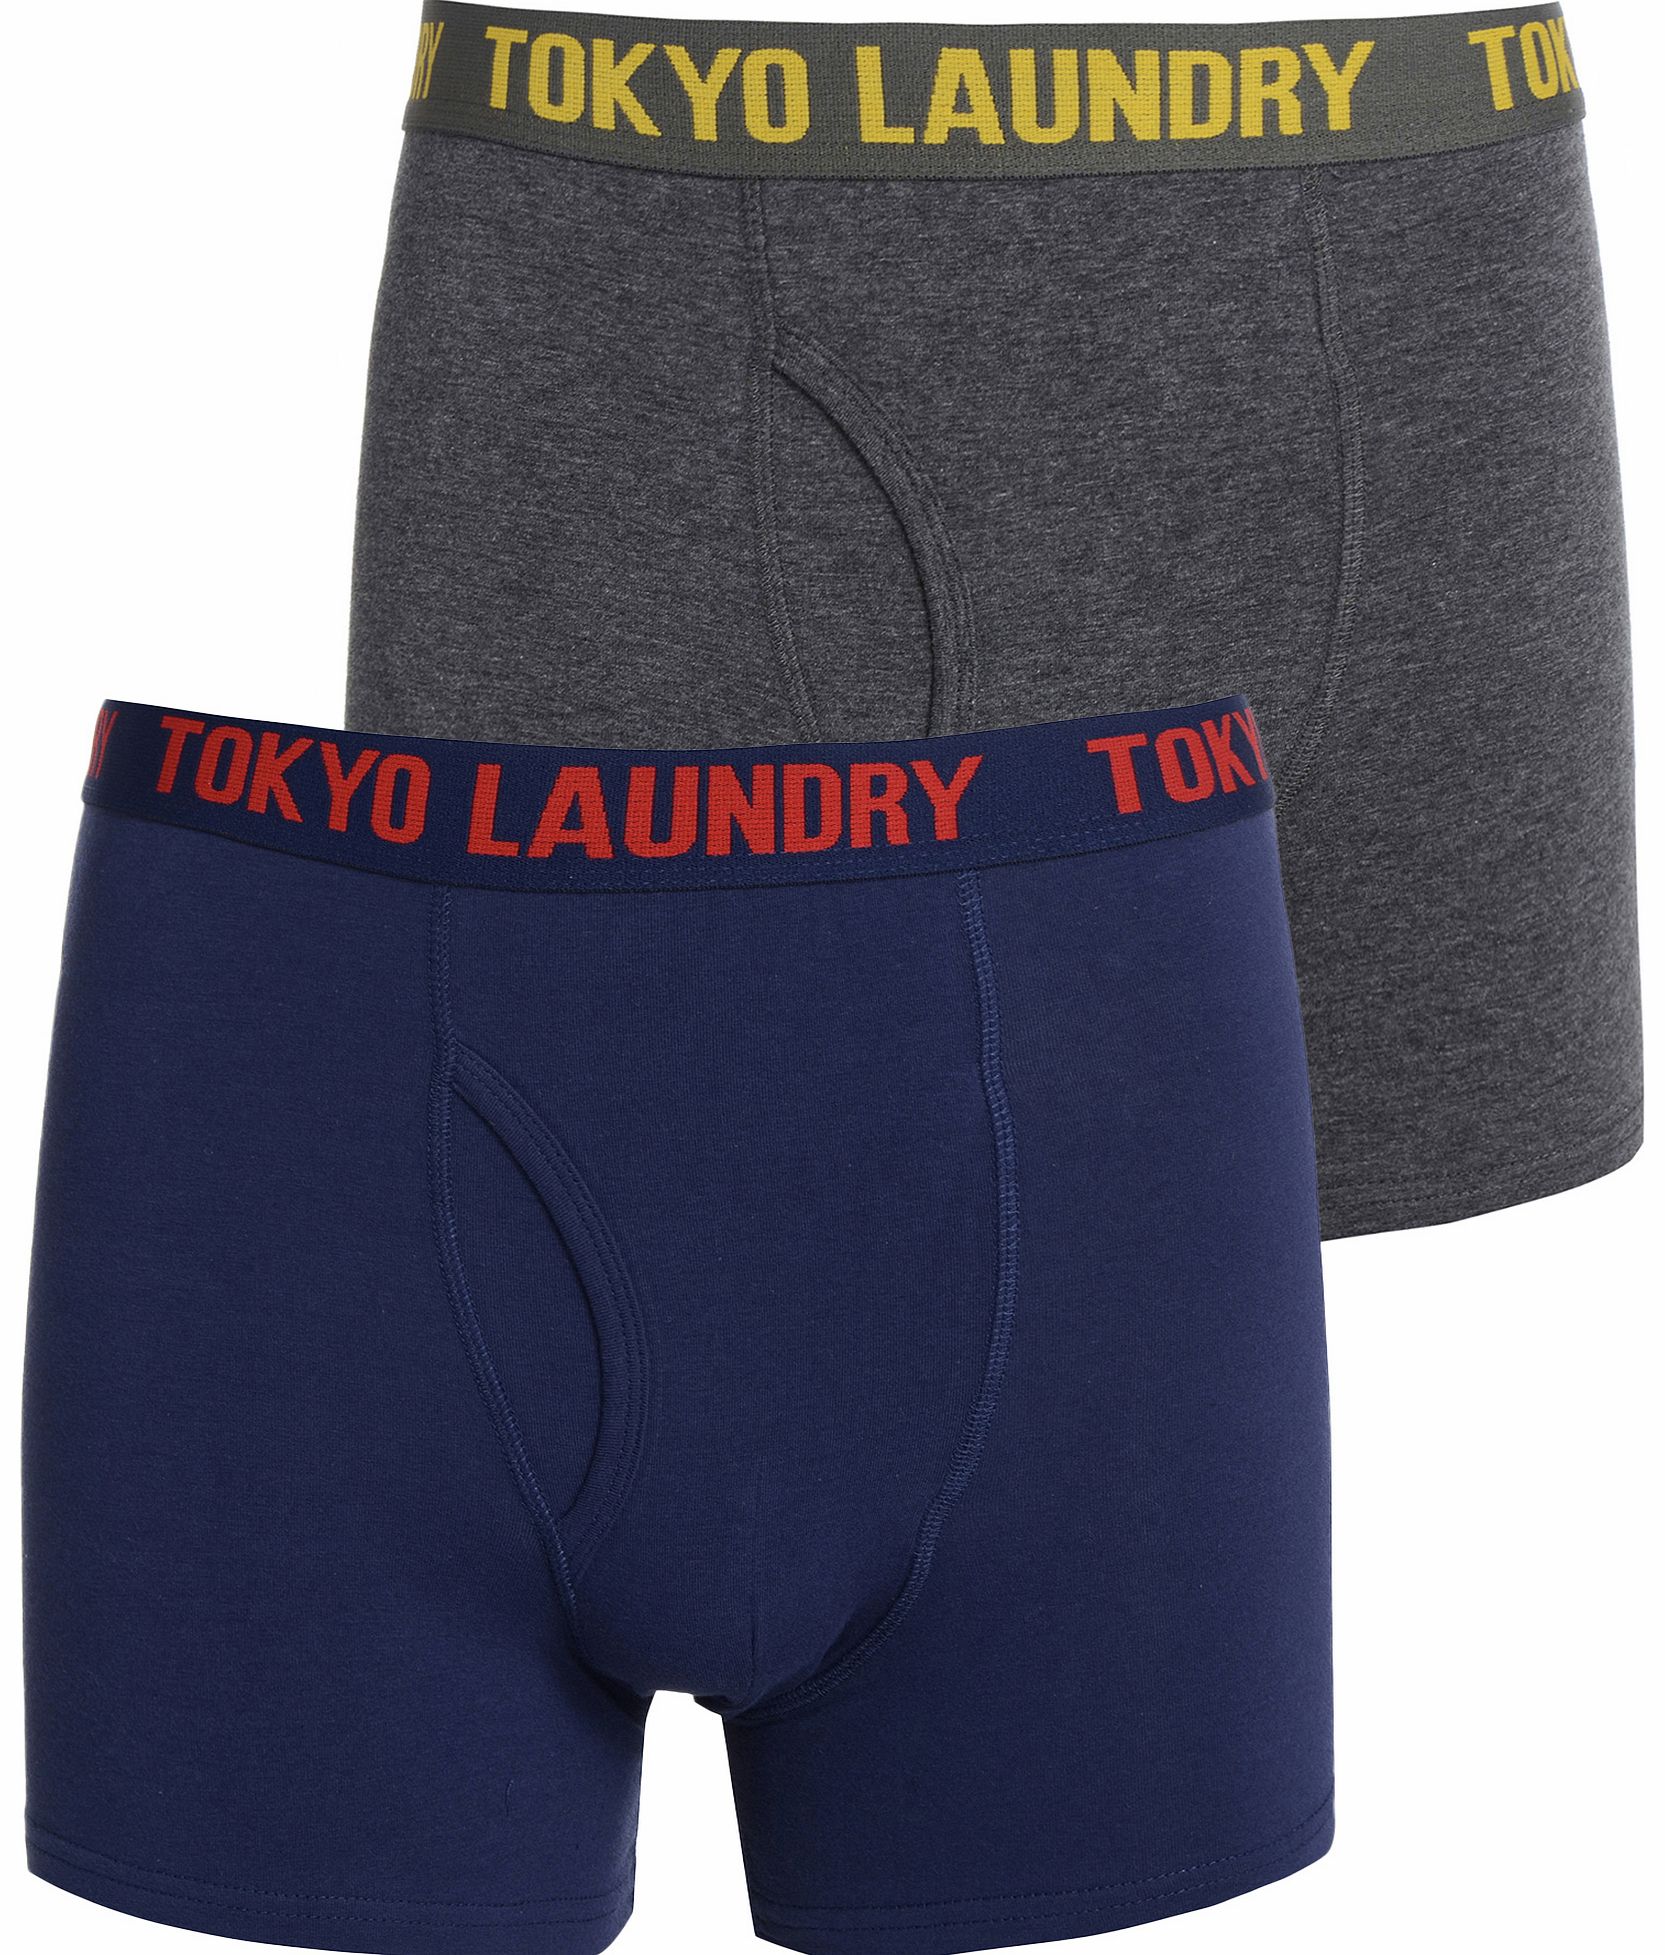 Tokyo laundry Mount Tahoe Boxers